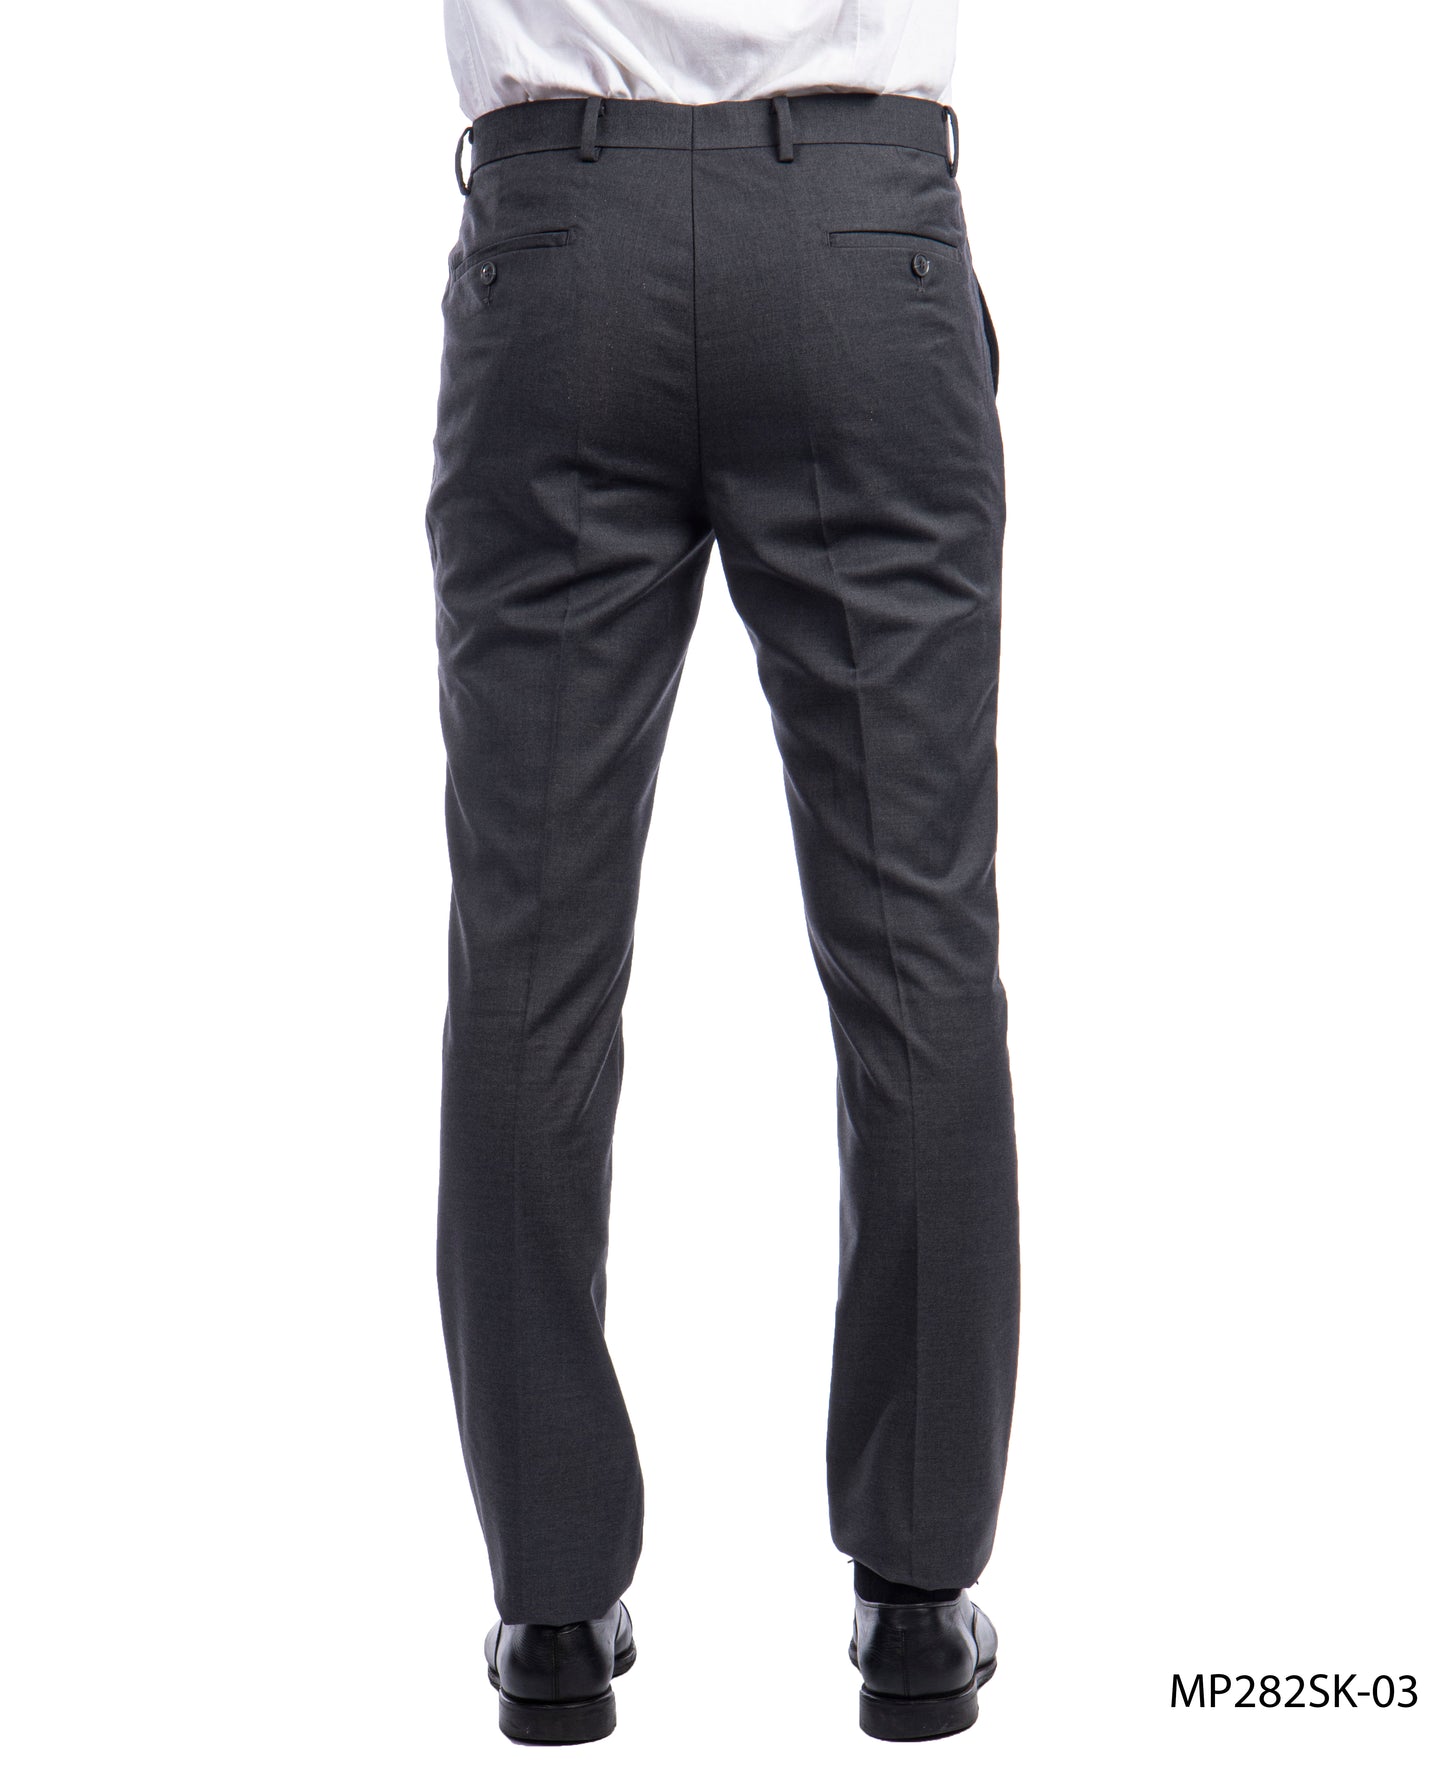 Sean Alexander Mens Charcoal Performance Stretch Dress Pants MP282SK-03